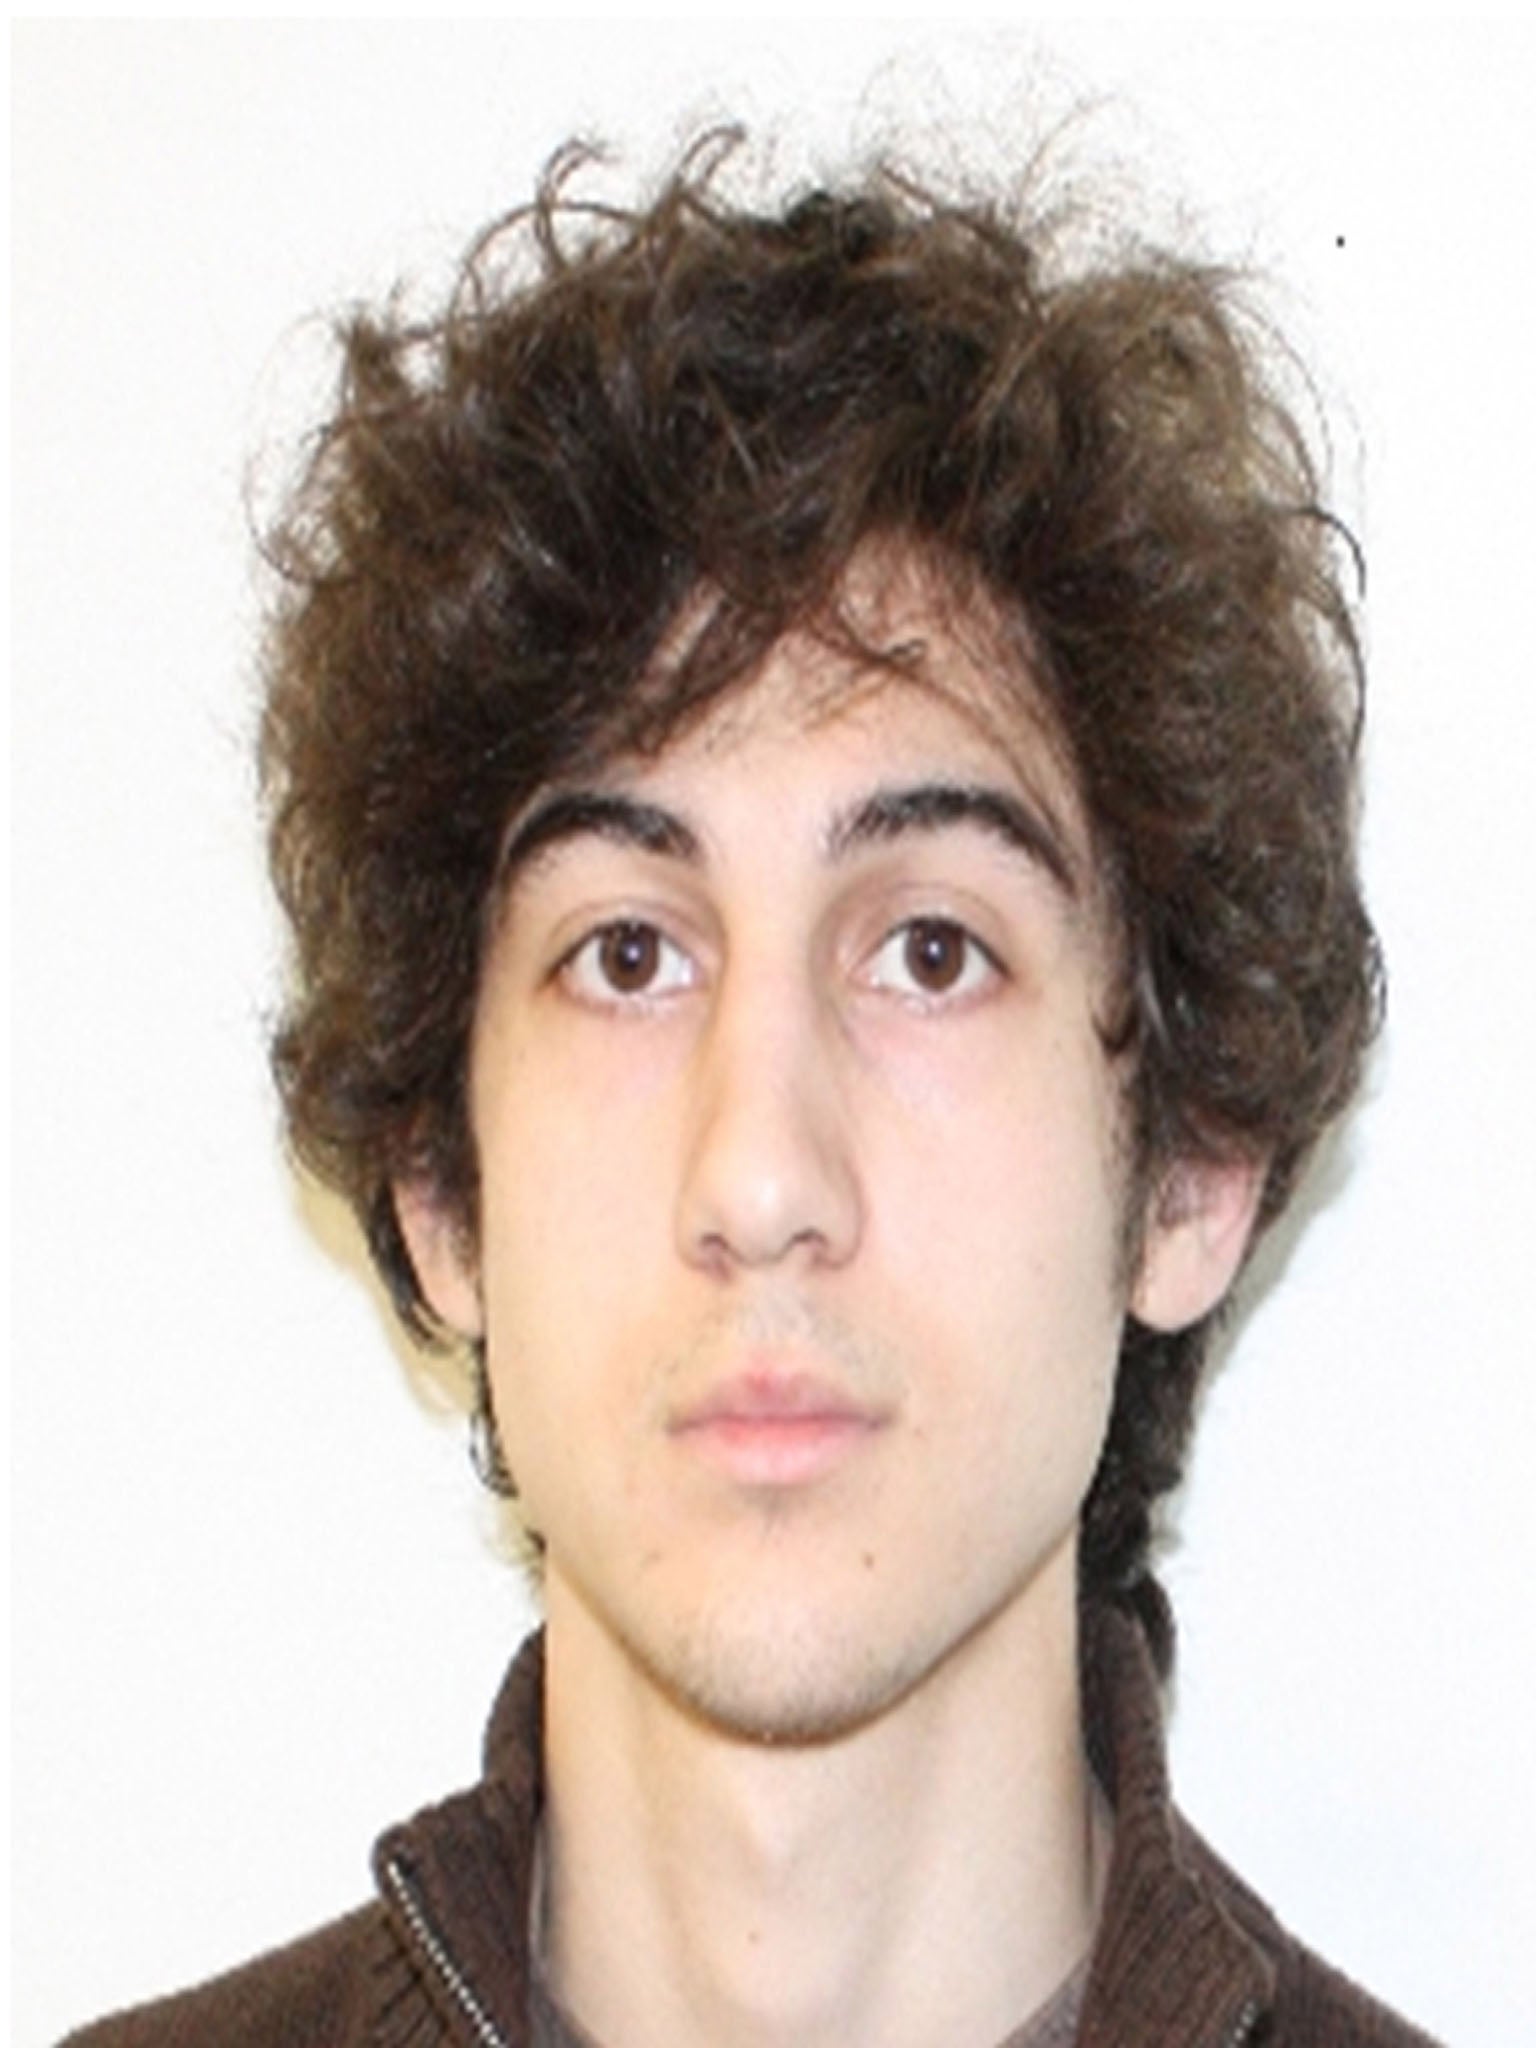 Dzhokhar Tsarnaev had denied the multiple charges he faced